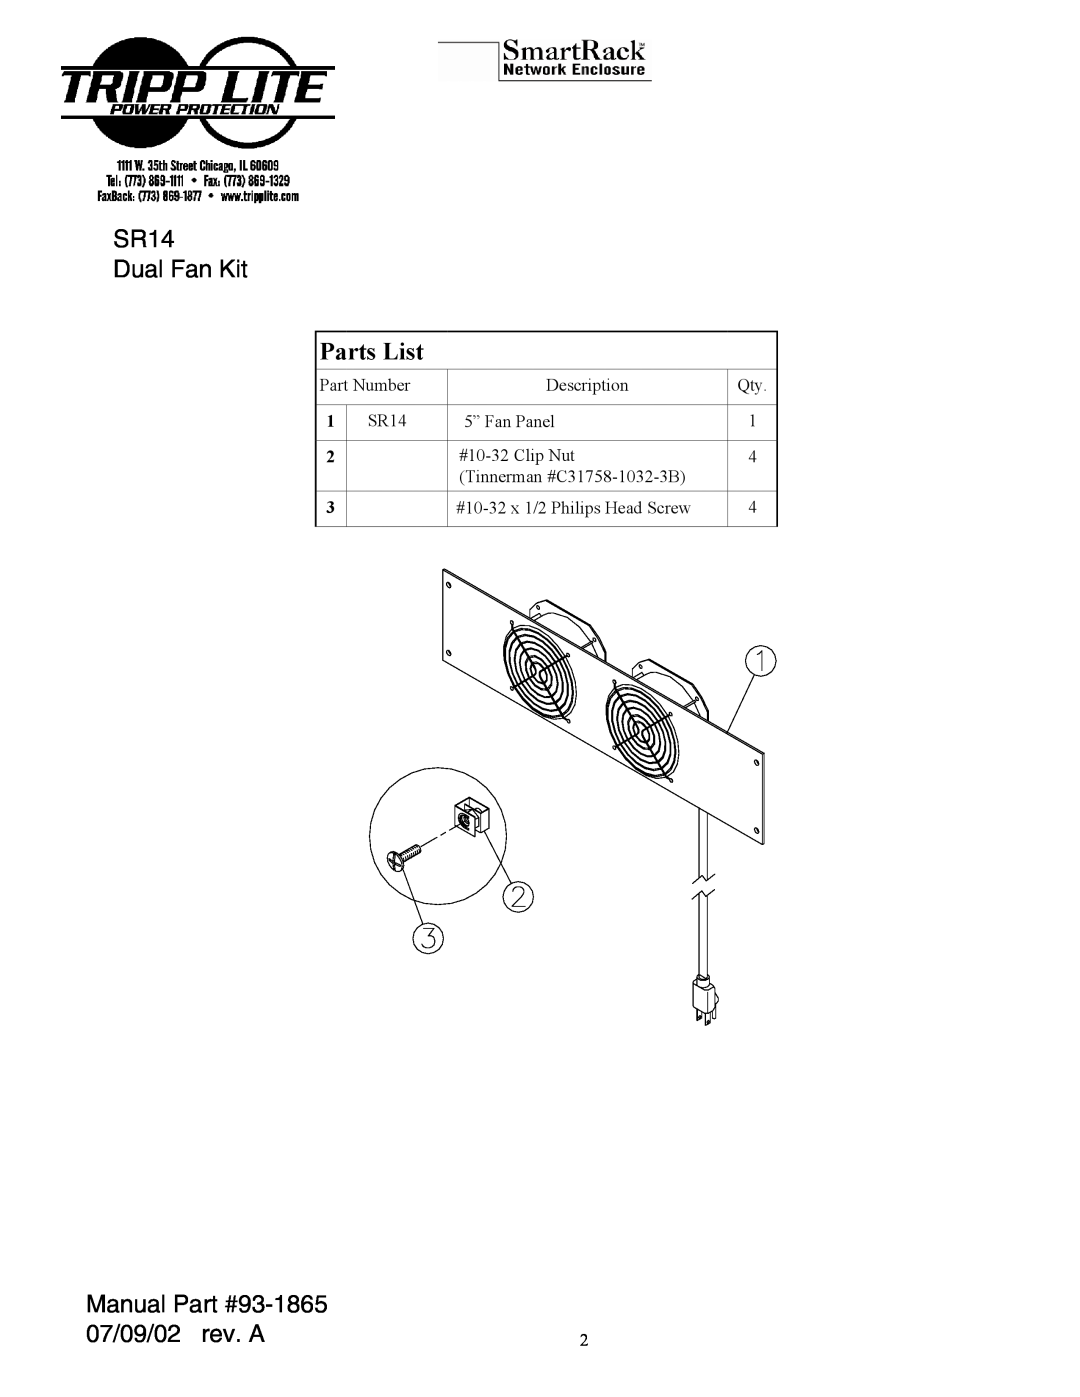 Tripp Lite manual SR14 Dual Fan Kit, Parts List, Manual, 07/09/02 rev. A 